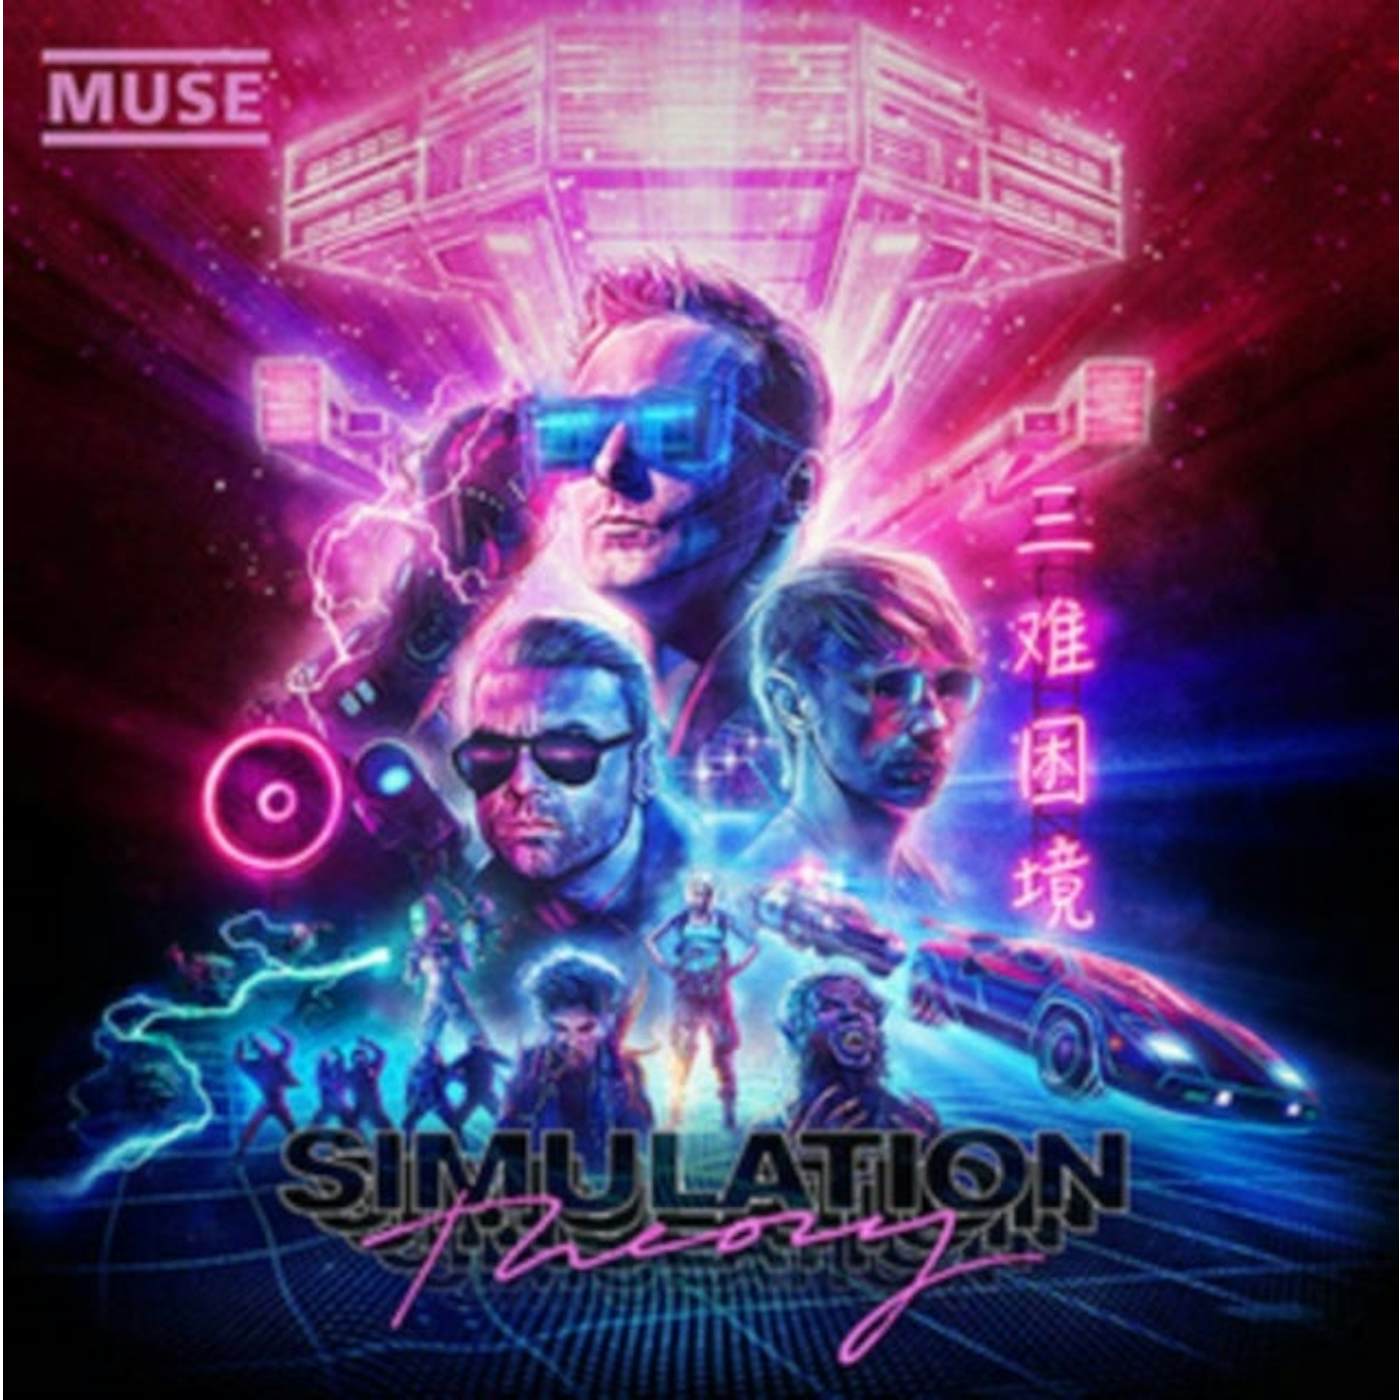 Muse LP Vinyl Record - Simulation Theory